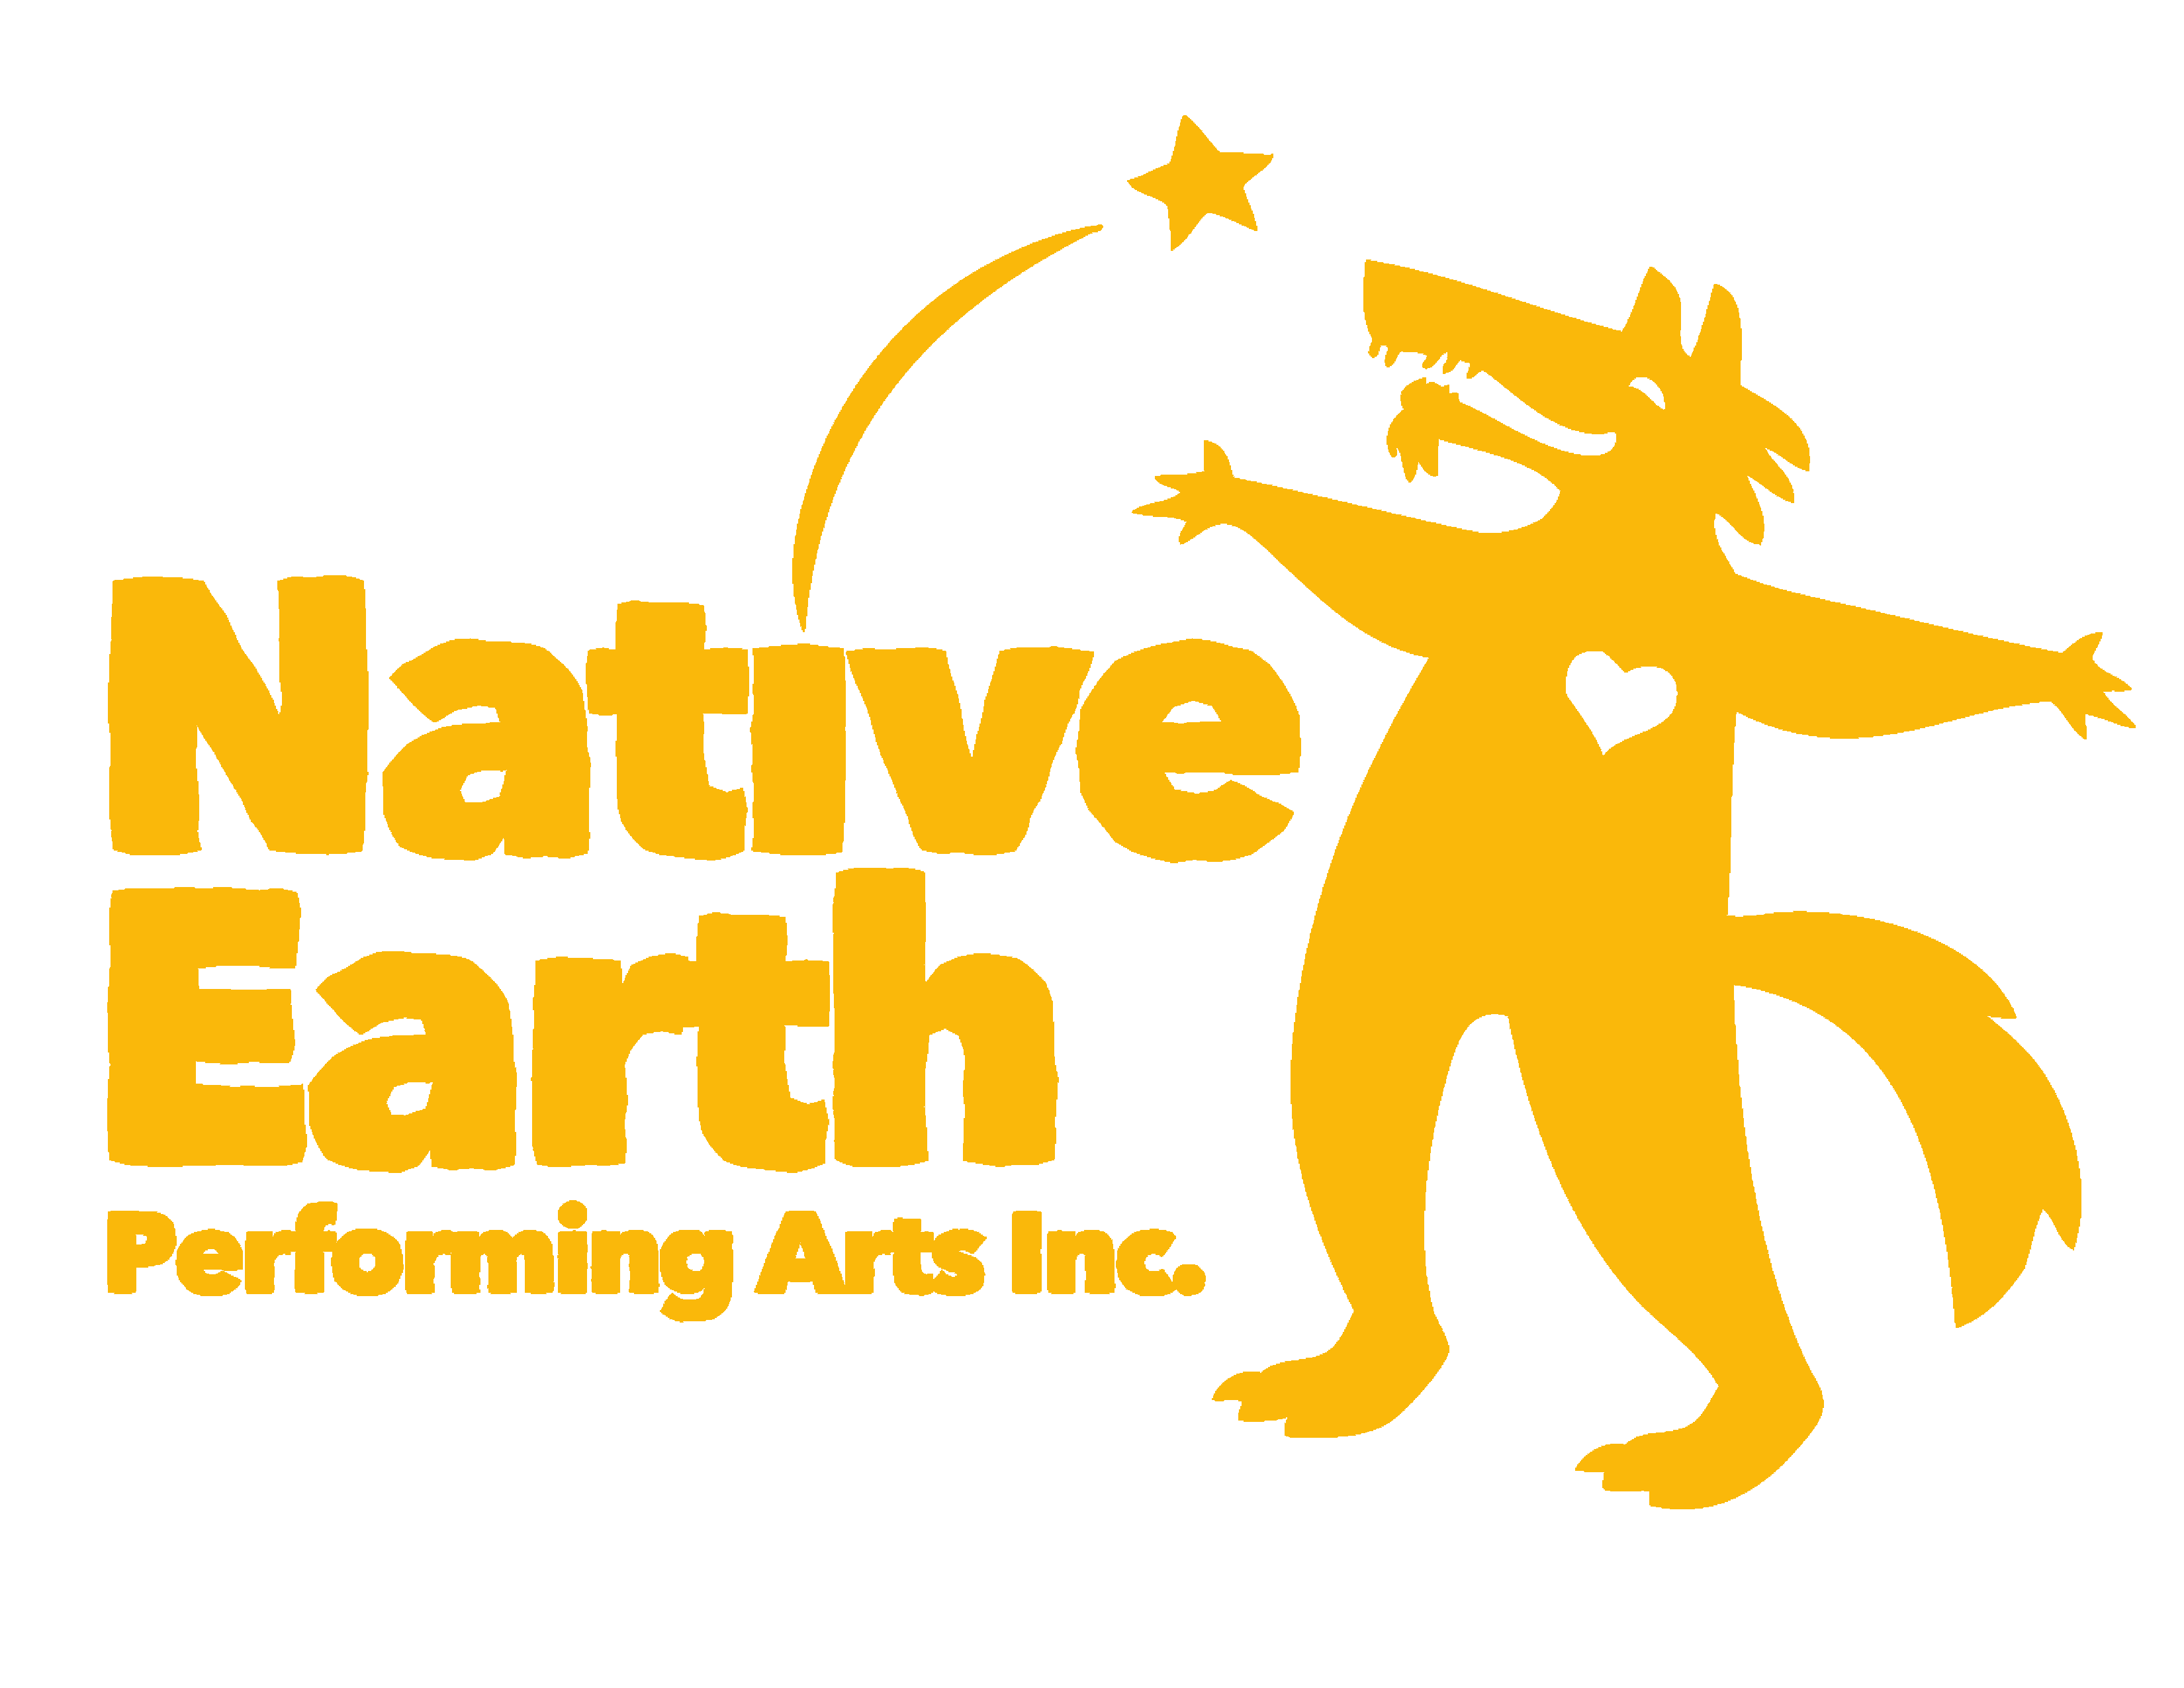 Native Earth Performing Arts Inc.